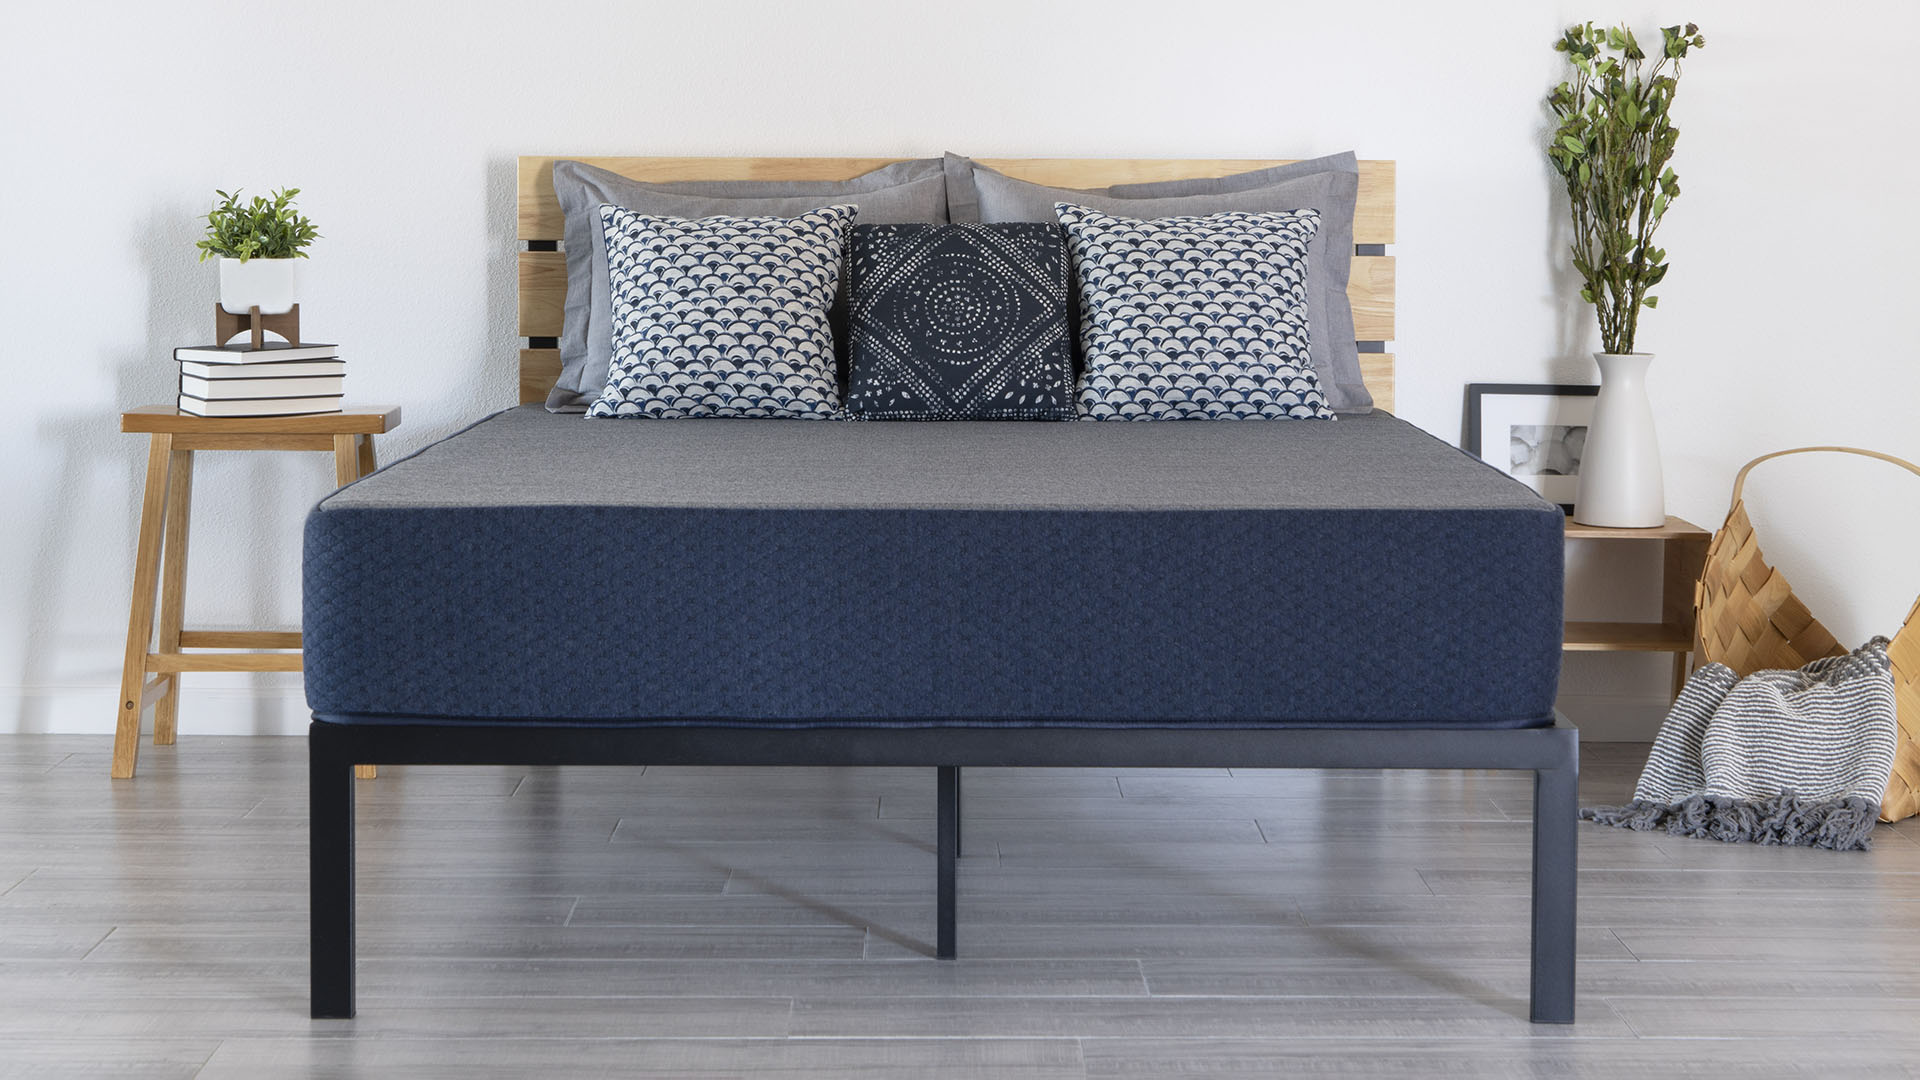 DreamFoam Essential mattress review: A budget-friendly mattress to fit ...